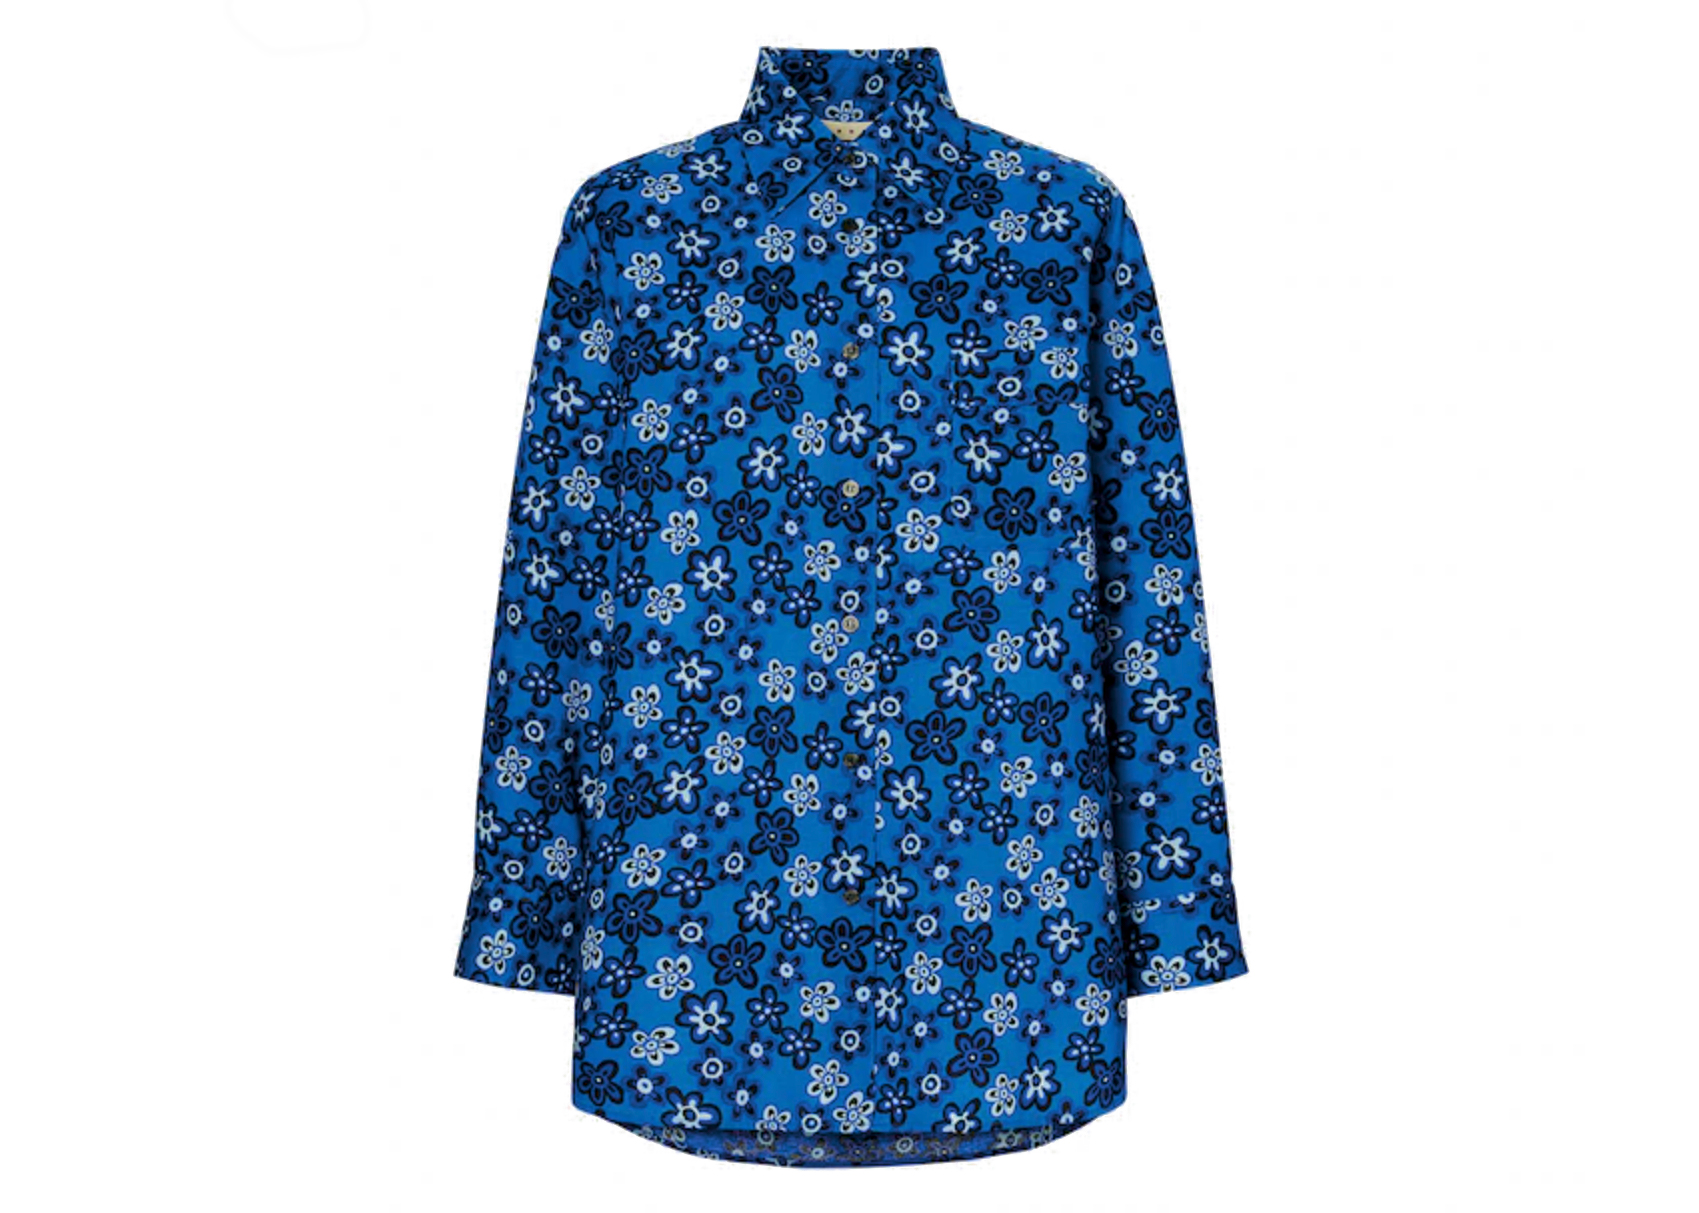 Uniqlo x MARNI Women's Oversized L/S Flower Shirt Blue - SS22 - US